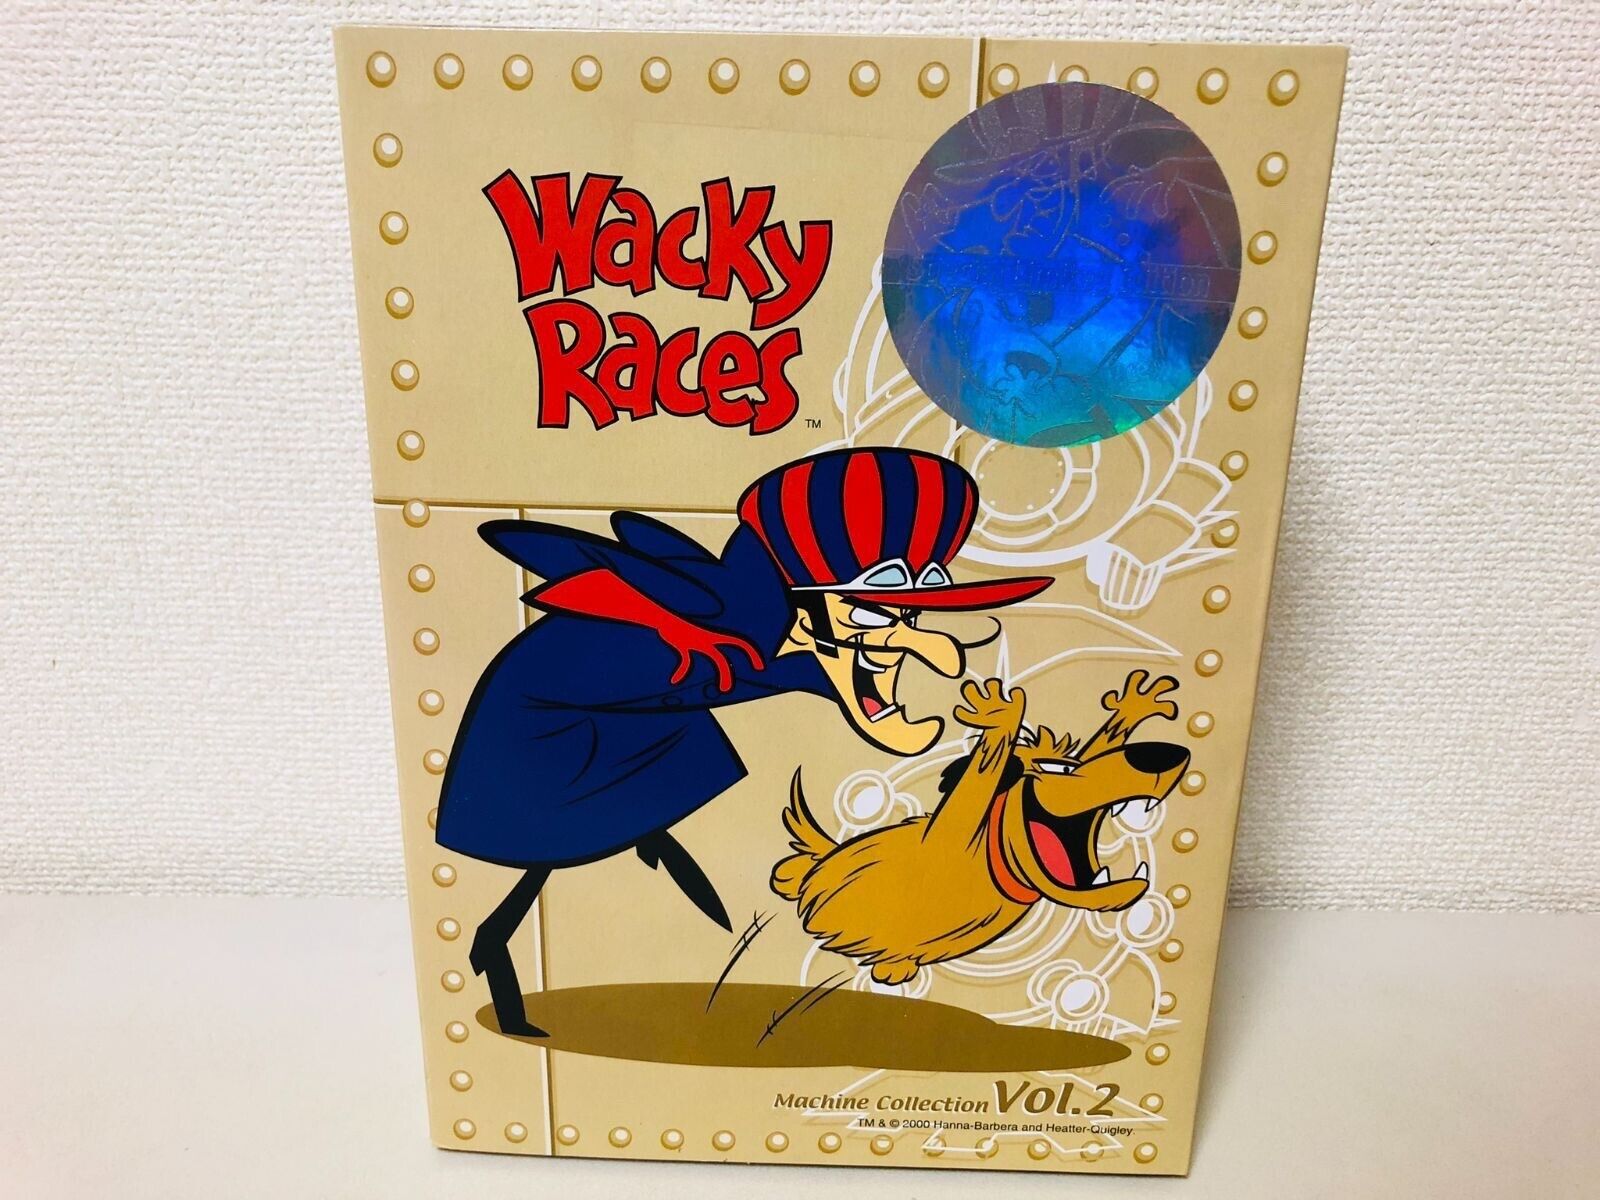 Wacky Race Machine Collection Box Vol.2 kensin wacky races Toy FedEx